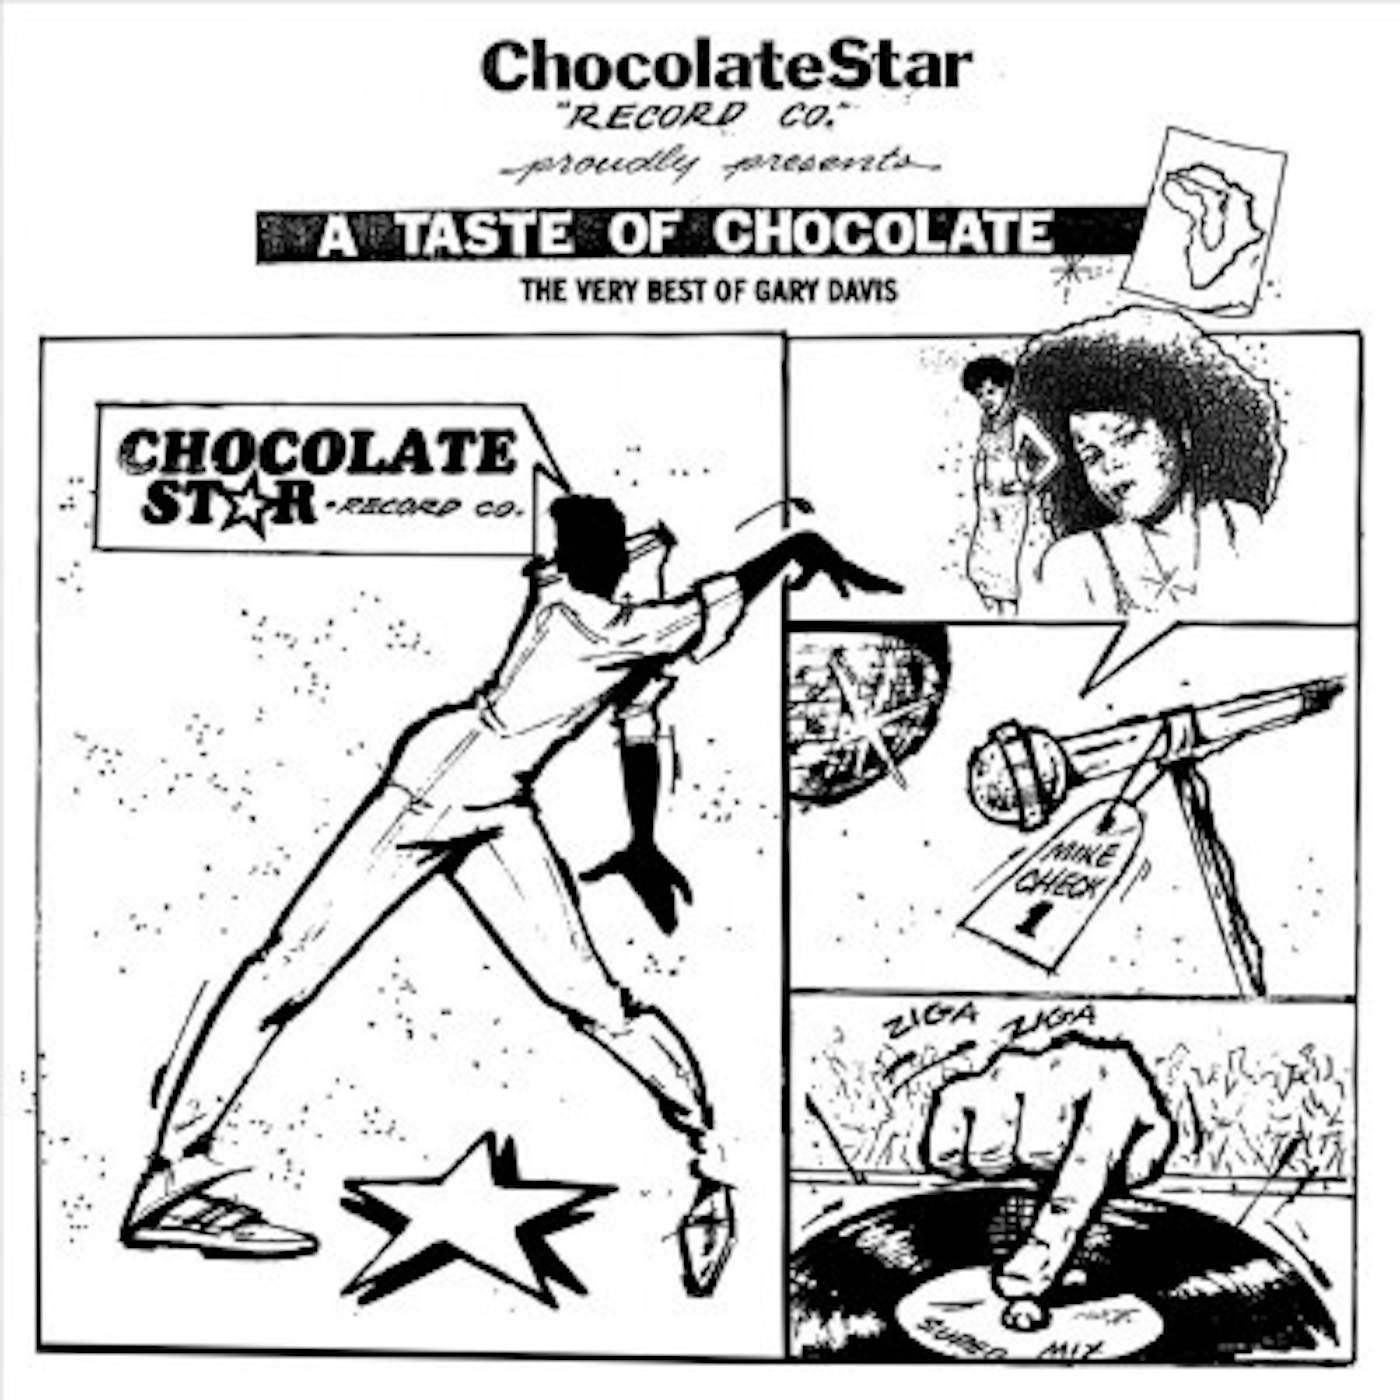 Taste Of Chocolate: The Very Best Of Gary Davis Vinyl Record